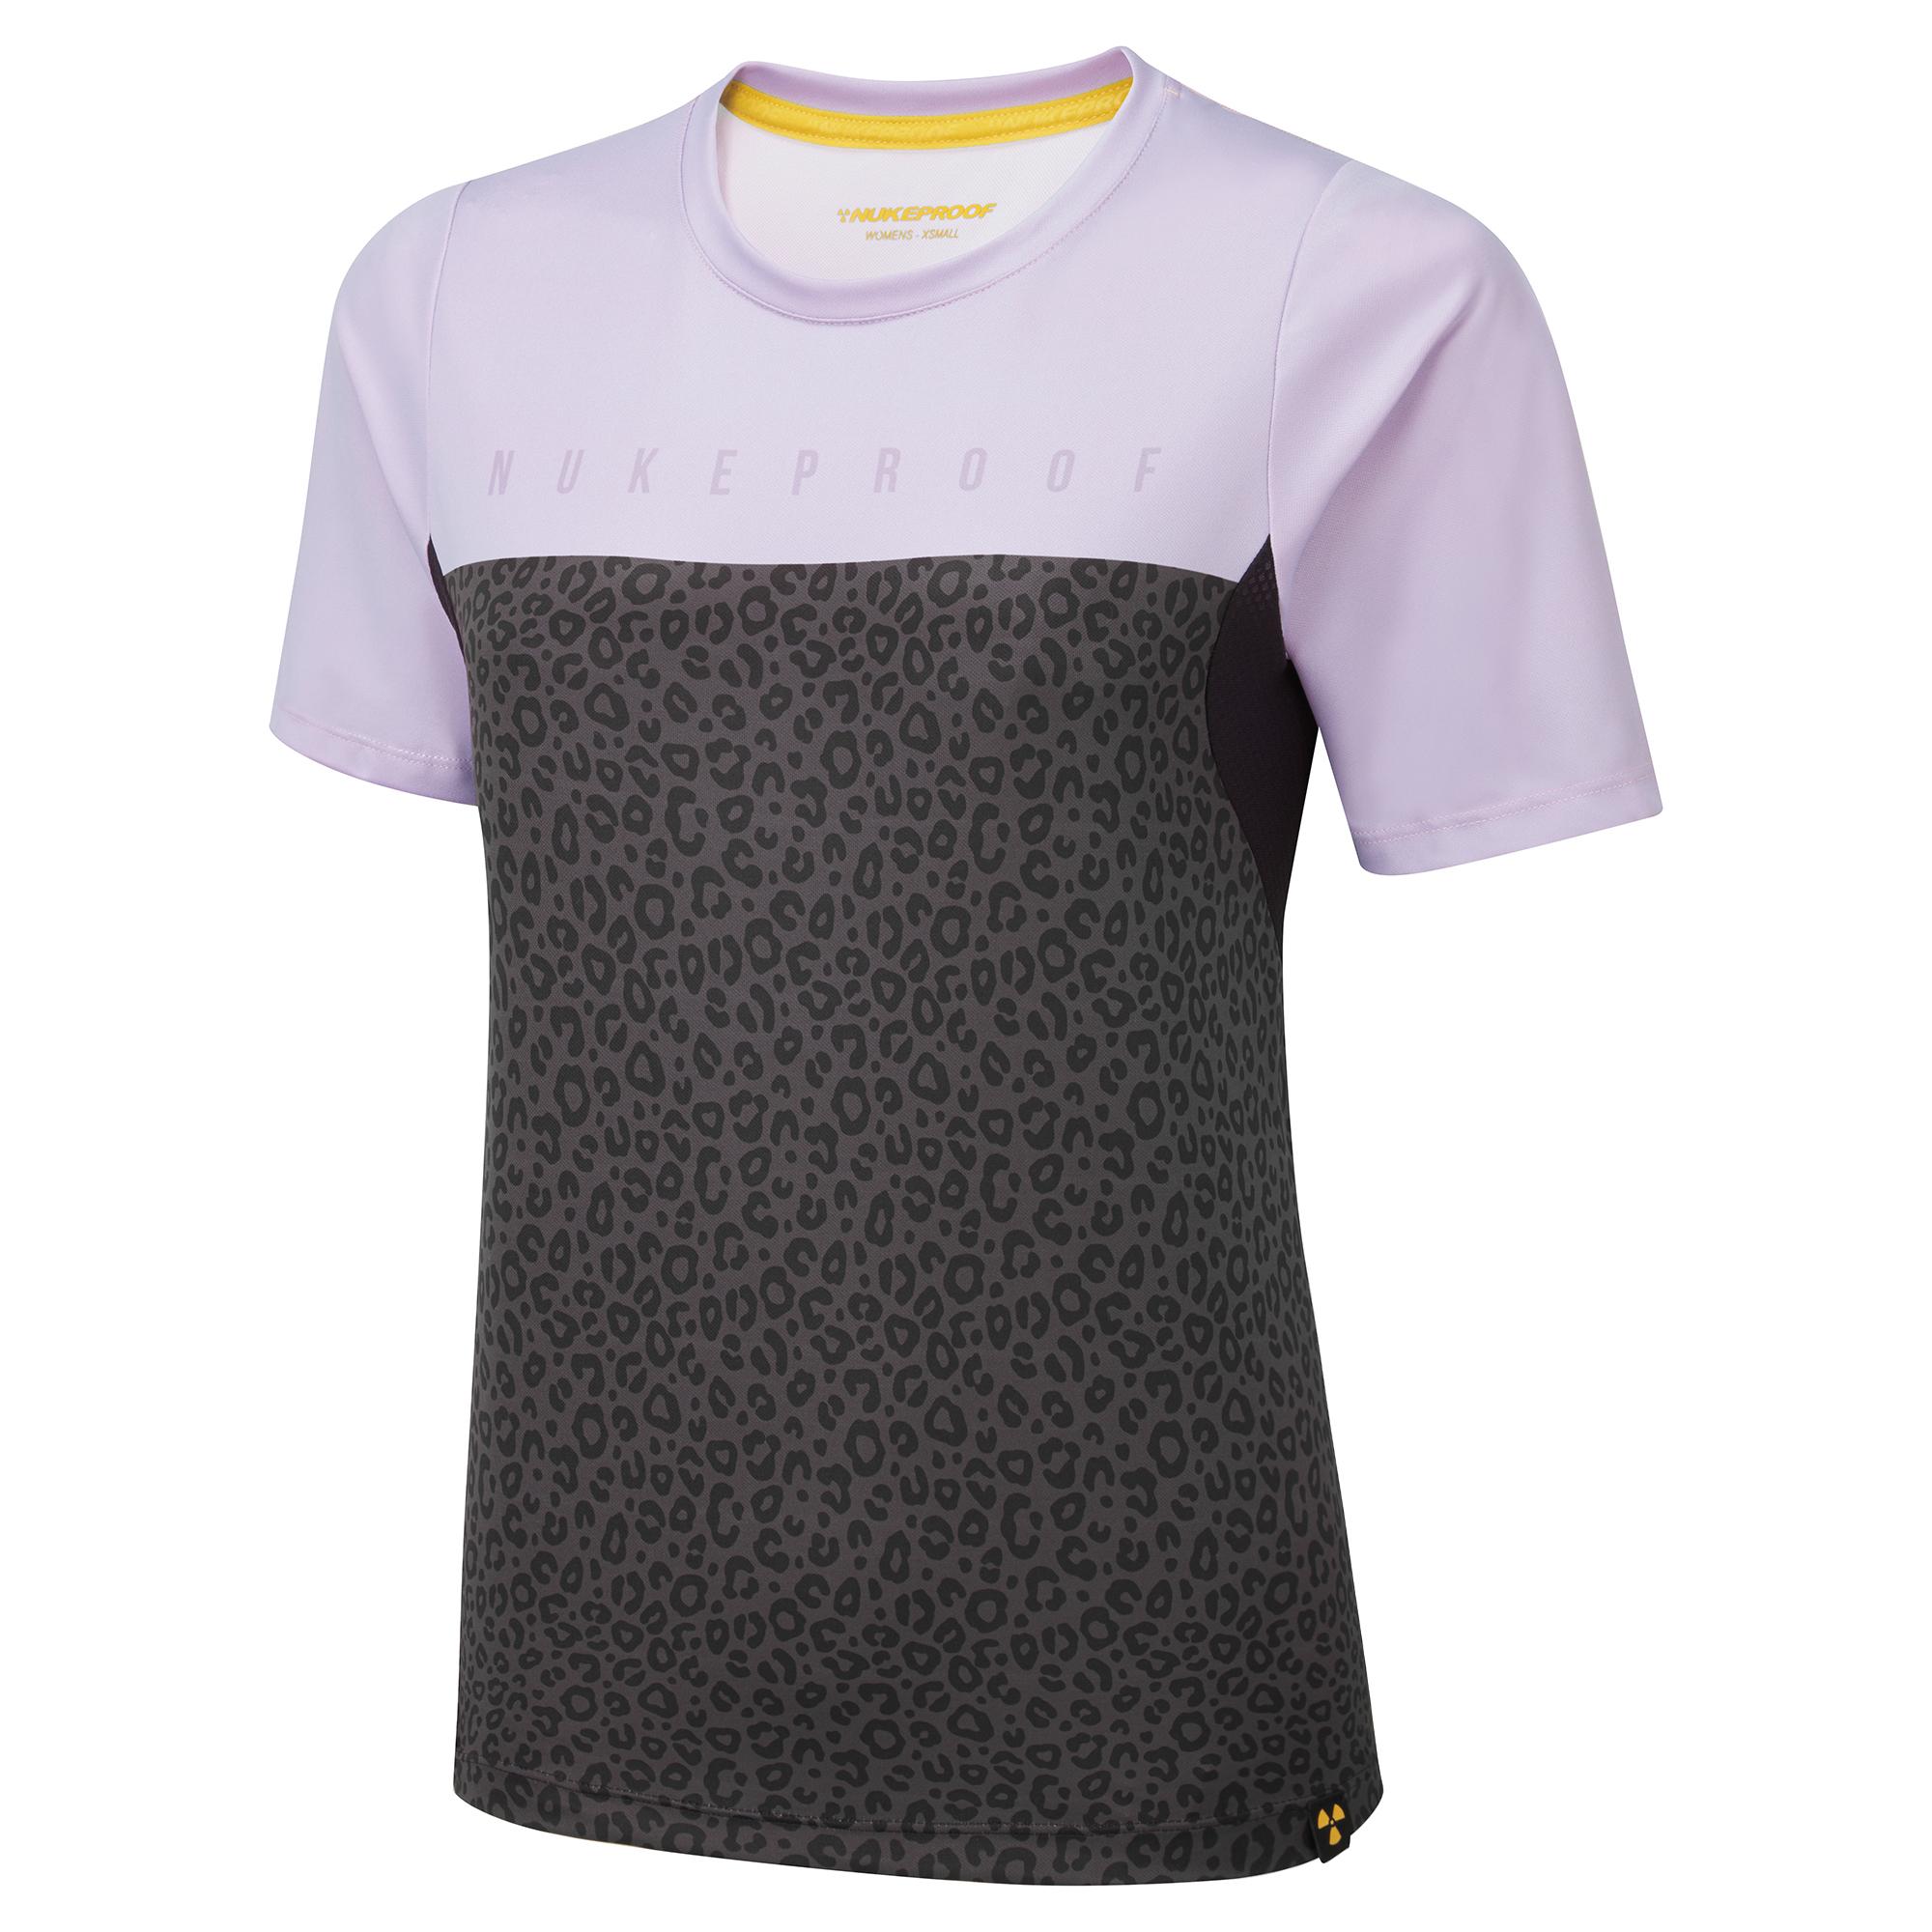 Nukeproof Blackline Womens Short Sleeve Jersey - Lavender